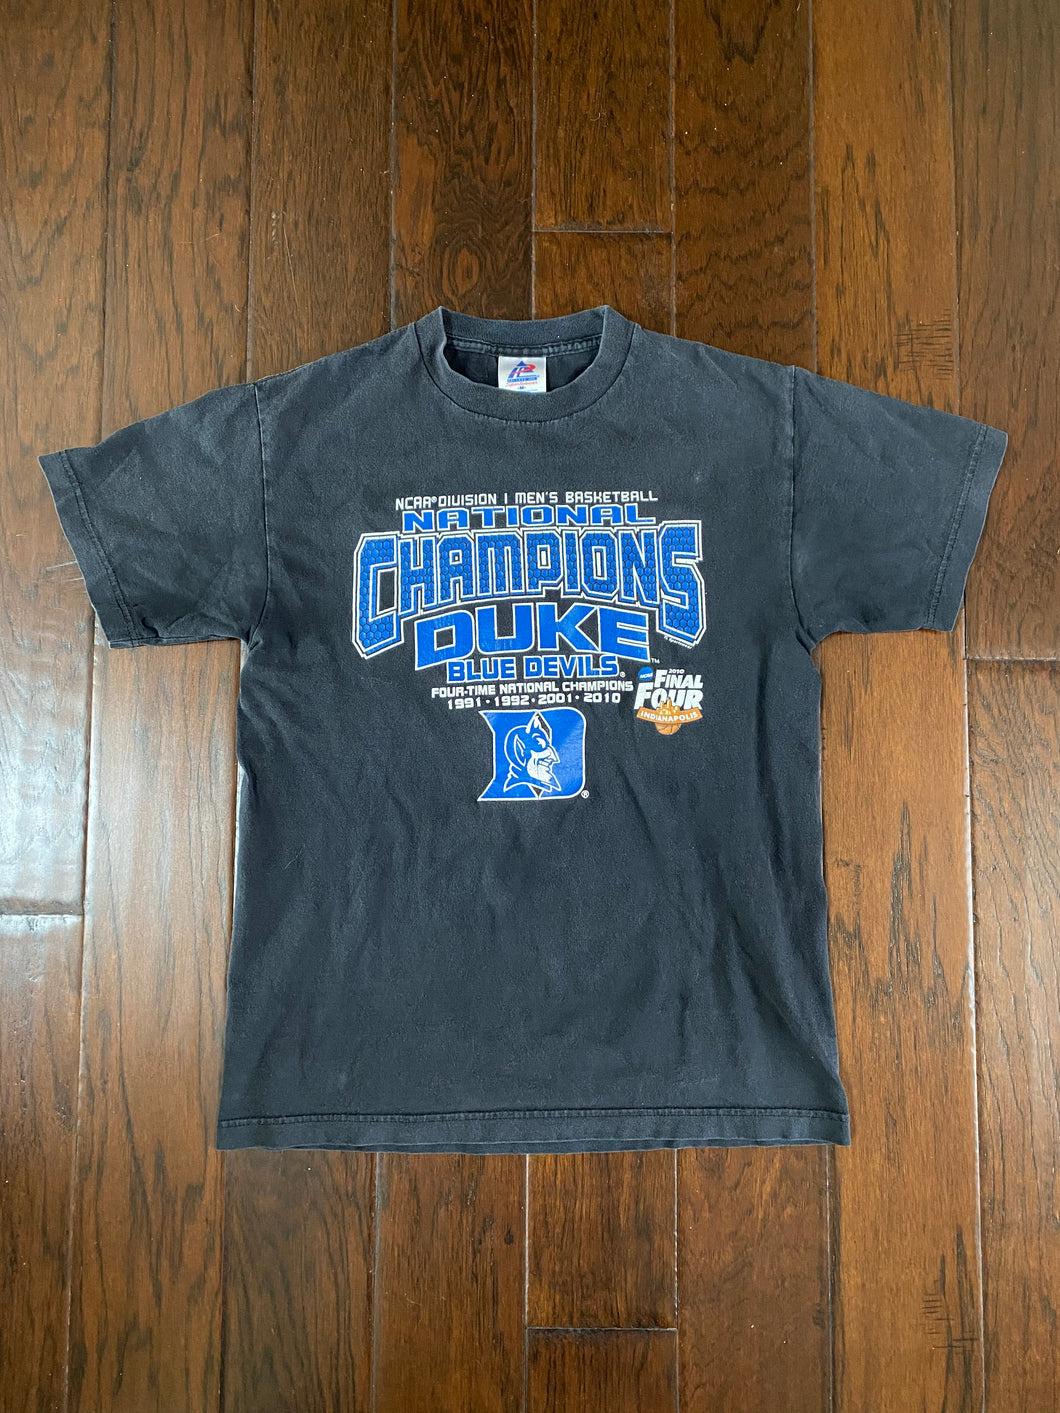 Duke Blue Devils 2010 “National Champions” Vintage Distressed T-shirt